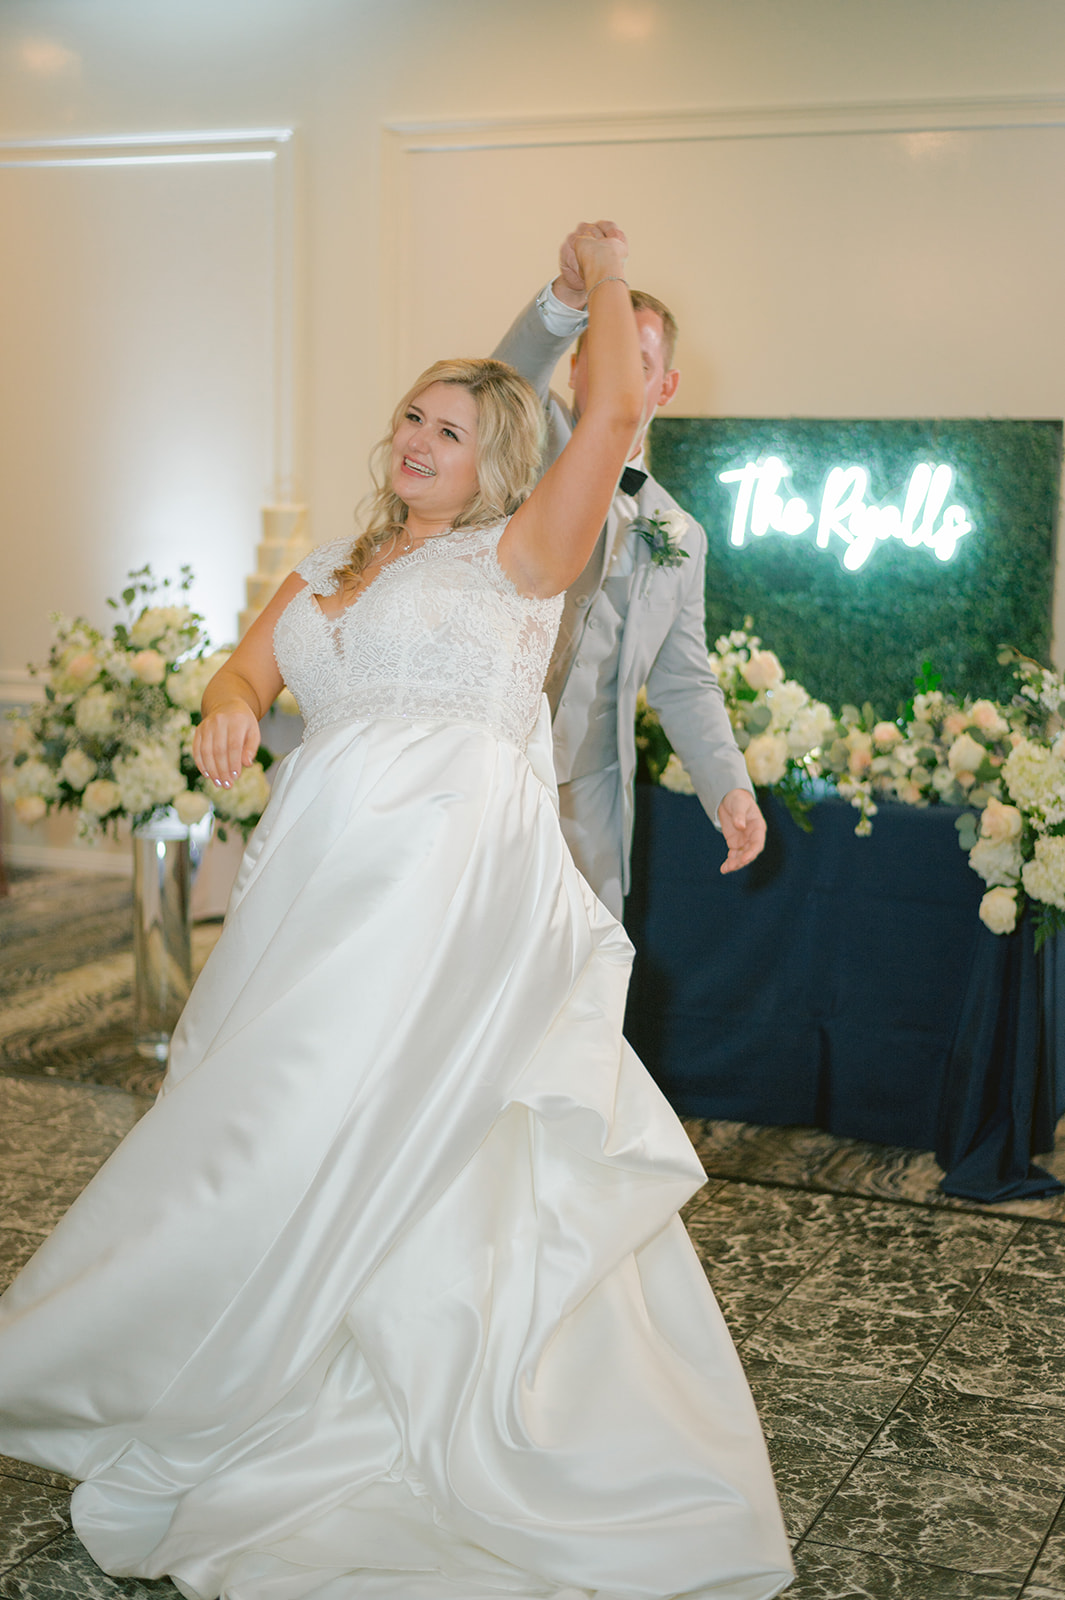 Hotel Zamora Wedding Ceremony: Bride and Groom Walking Down the Aisle as Newlyweds
